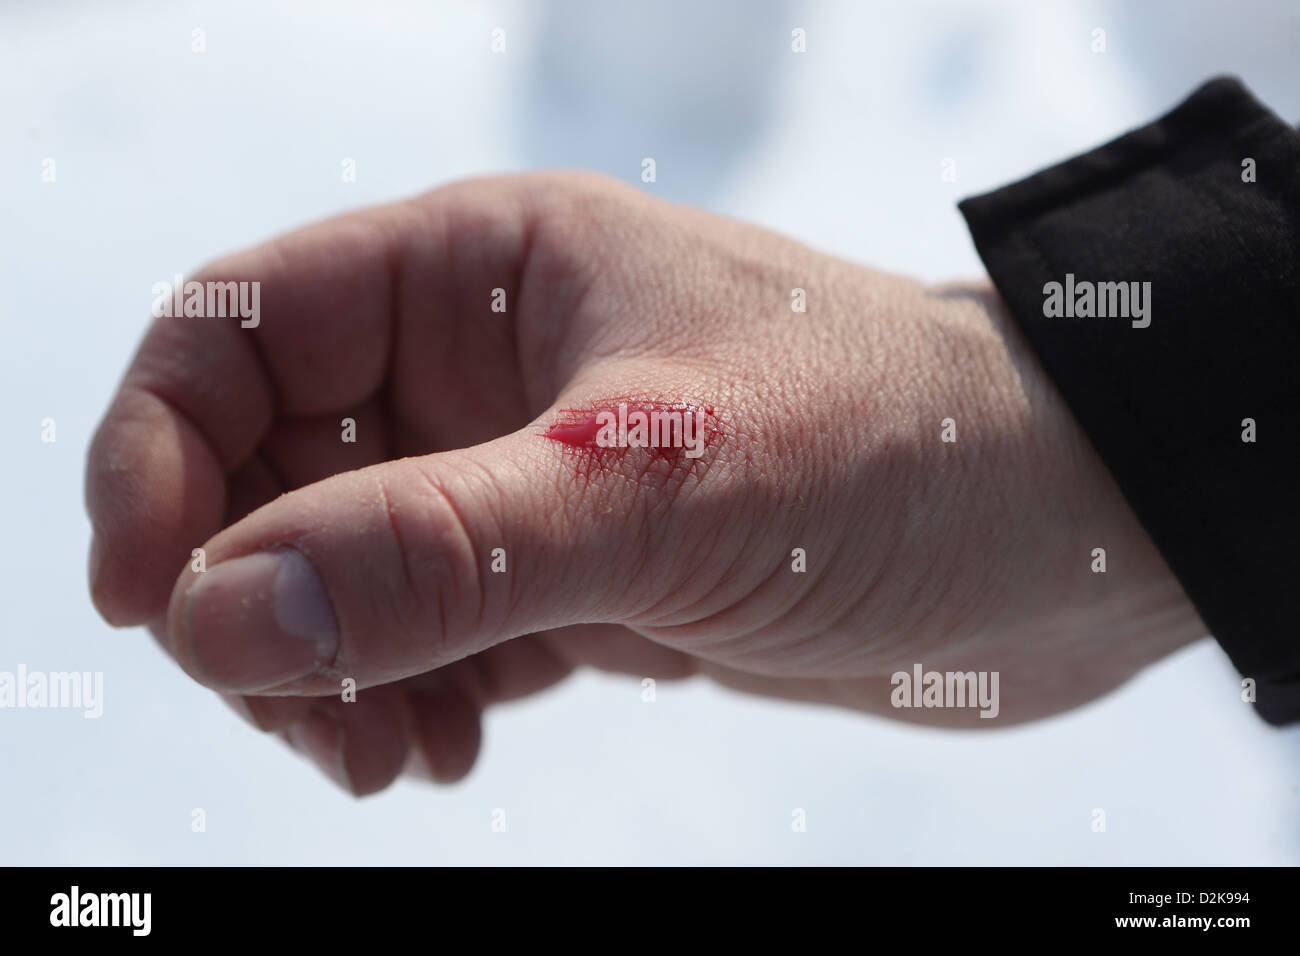 Wandlitz, Germany, bleeding wound on a hand Stock Photo